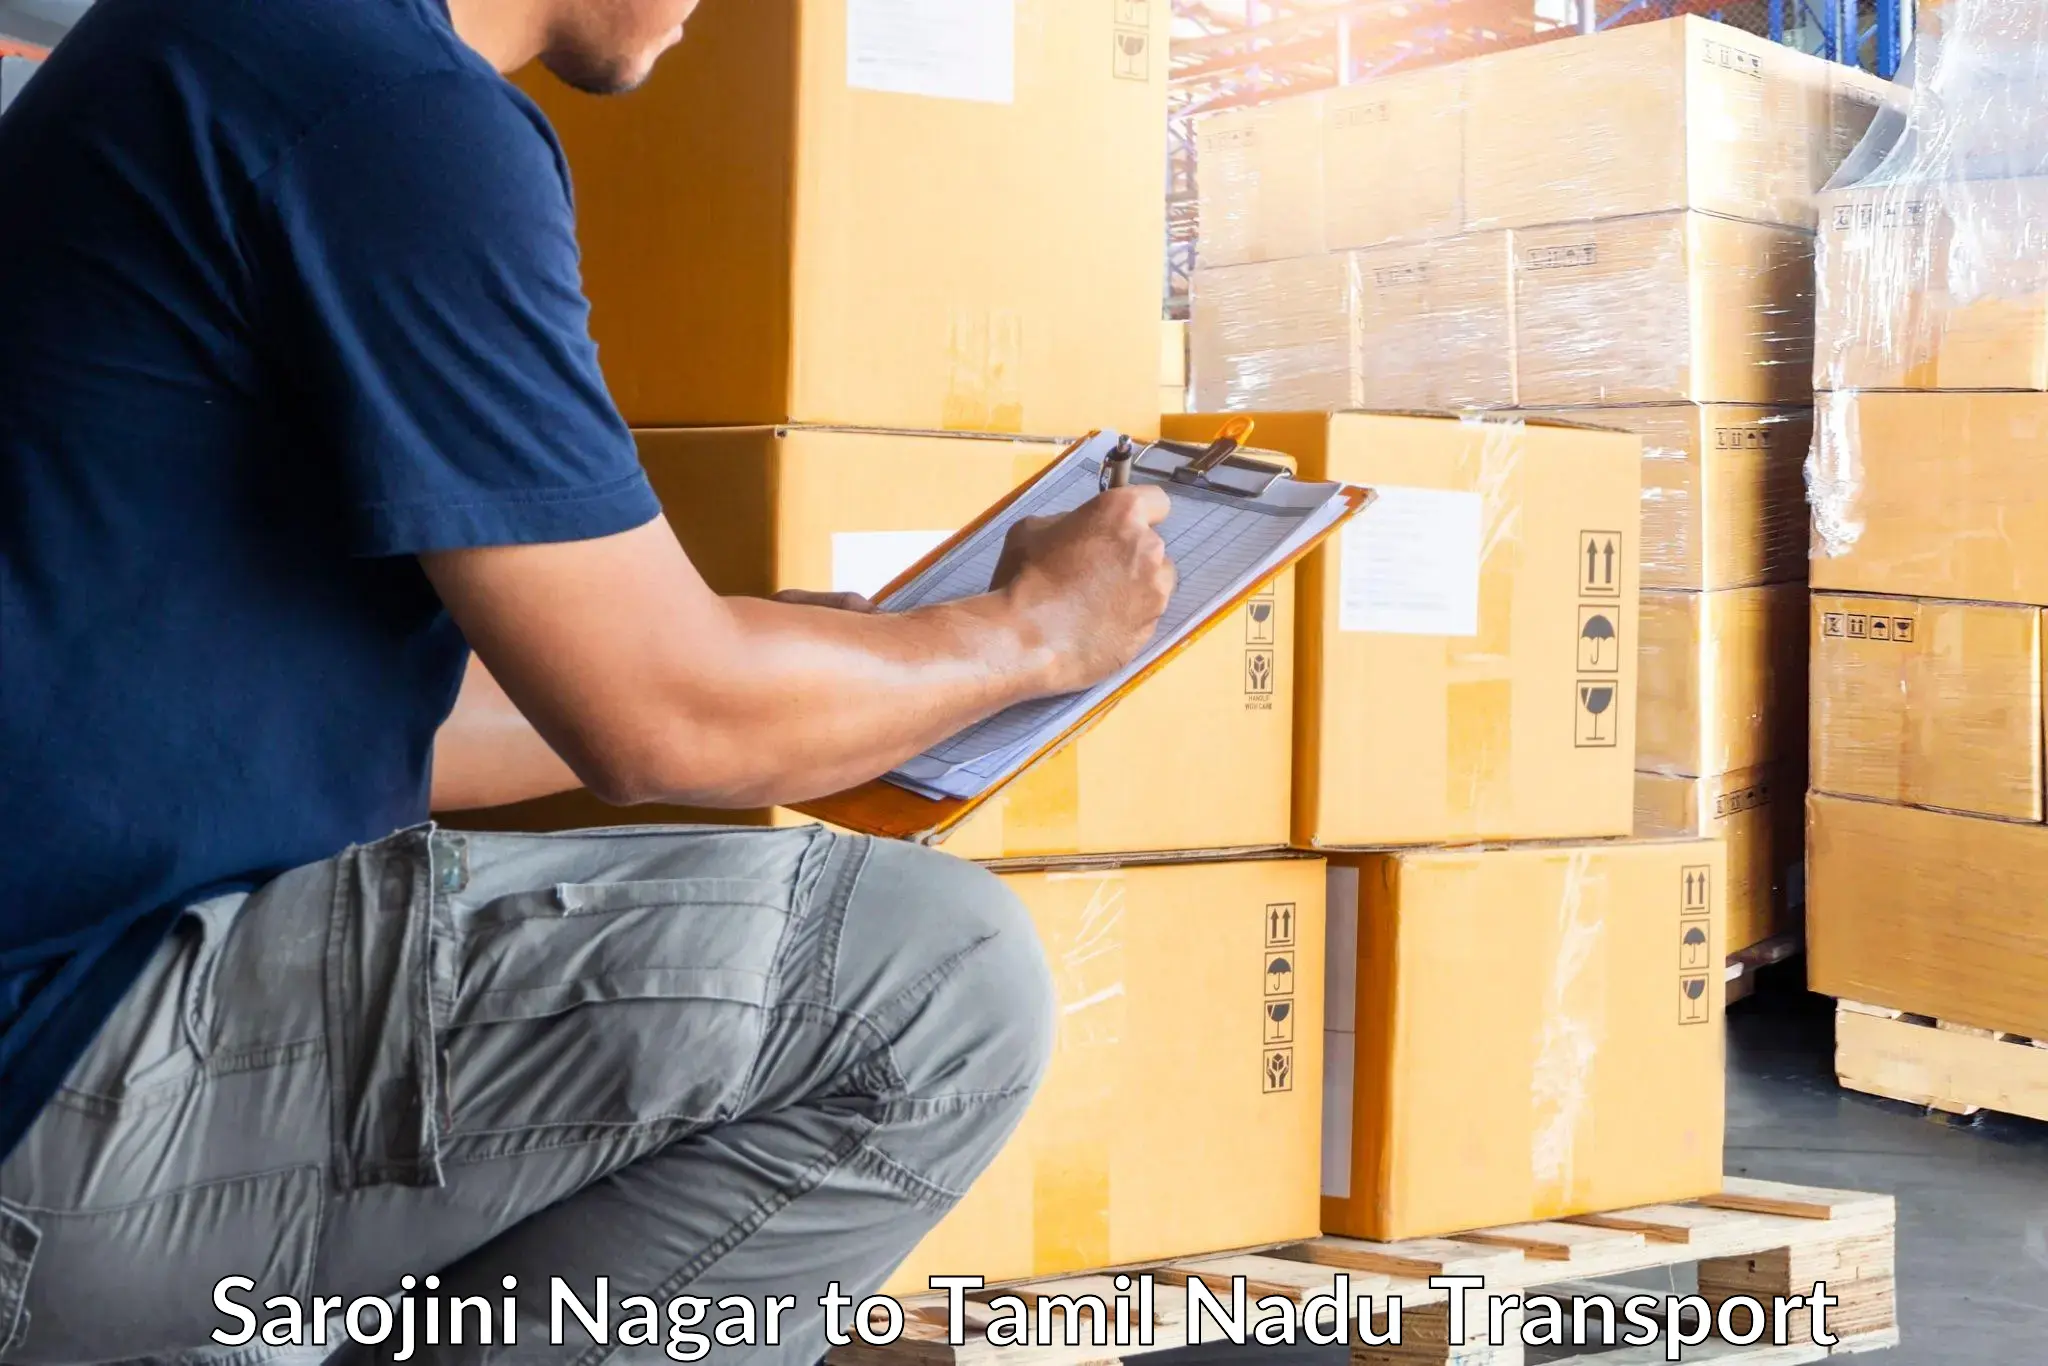 Shipping partner Sarojini Nagar to Tamil Nadu